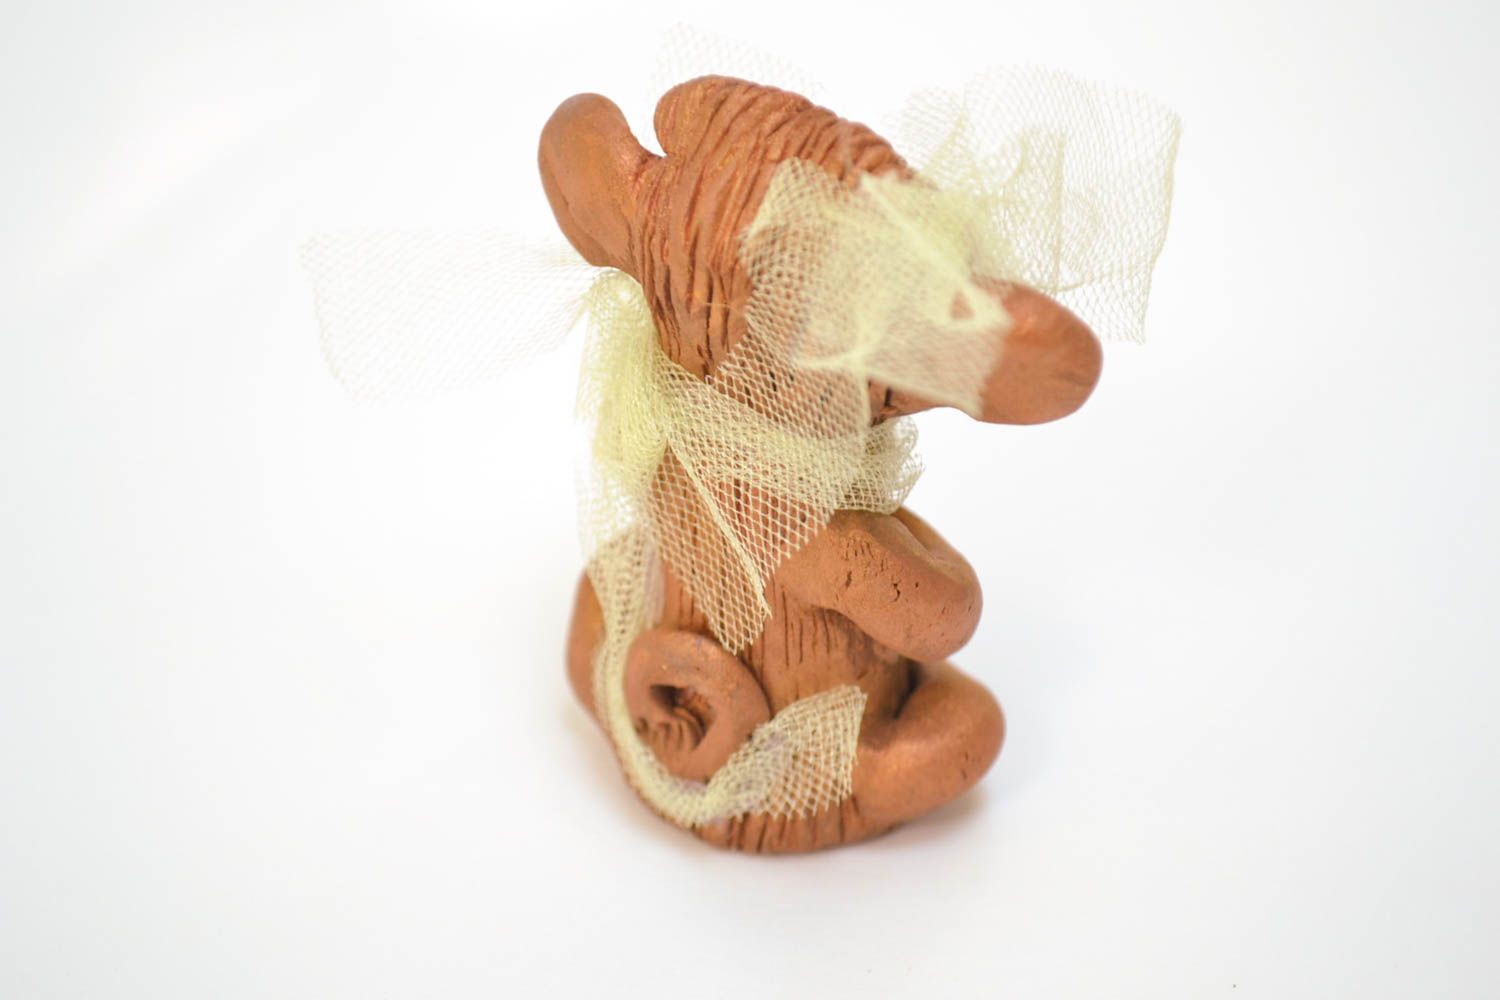 Ton Figuren handmade Deko aus Naturmaterialien charmant Keramik Tier lustig foto 3